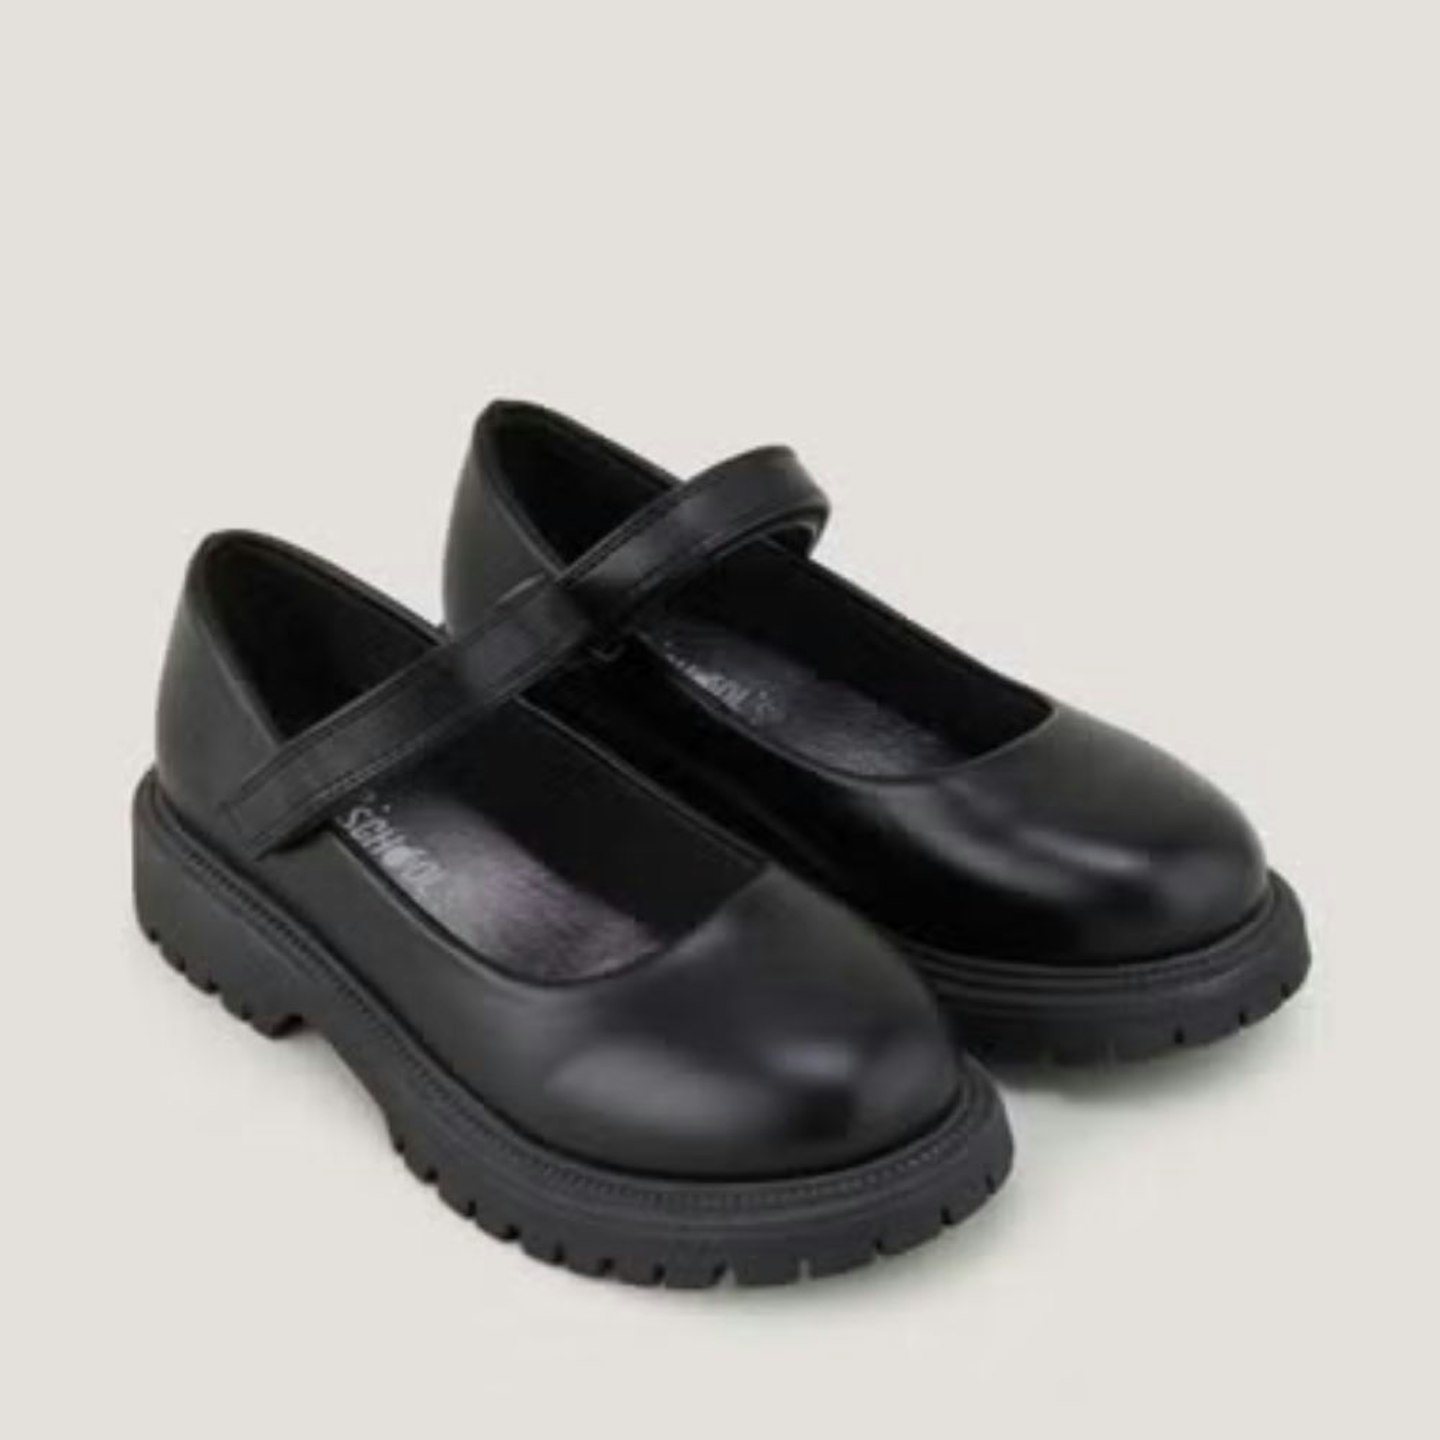 Girls Black School Shoes (Younger 10-Older 5) - Size 1